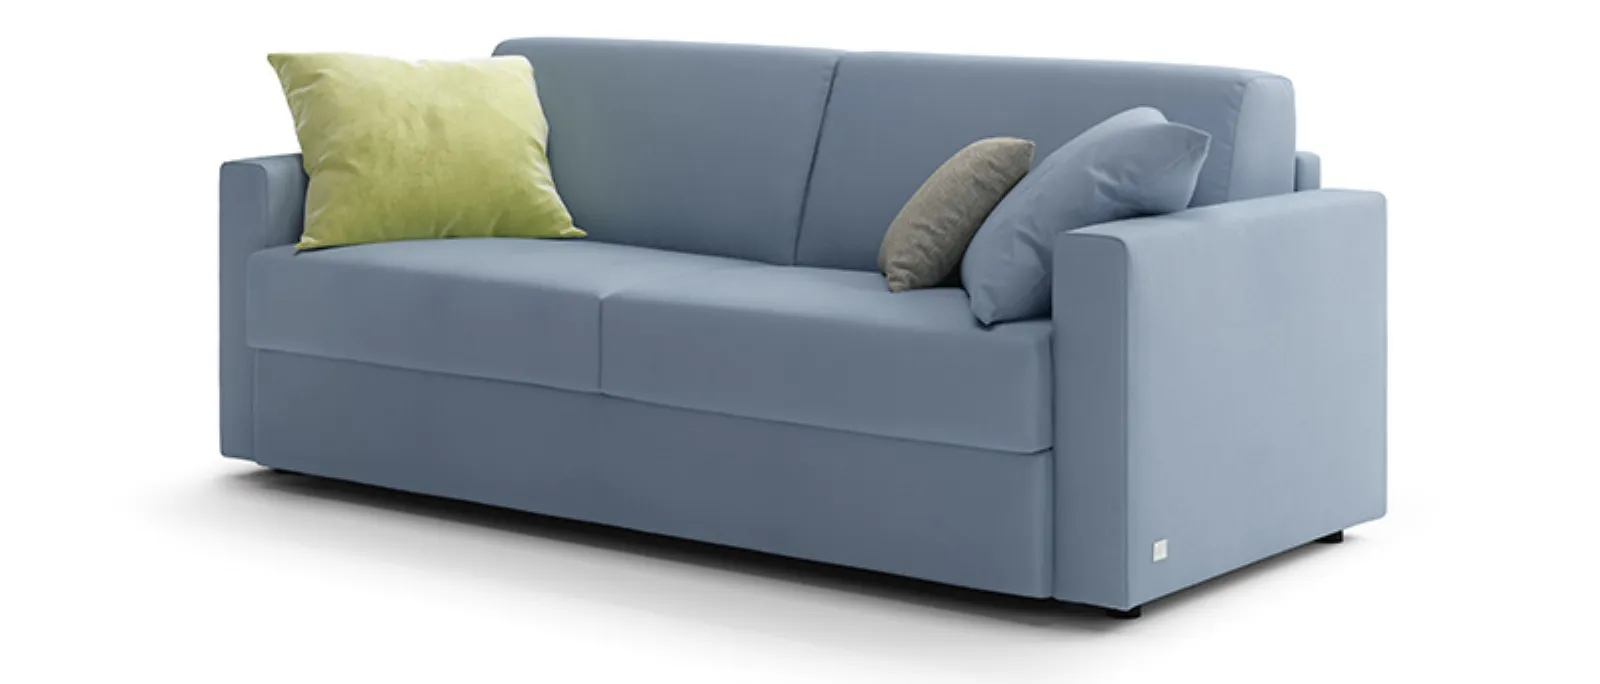 customizable sofa bed